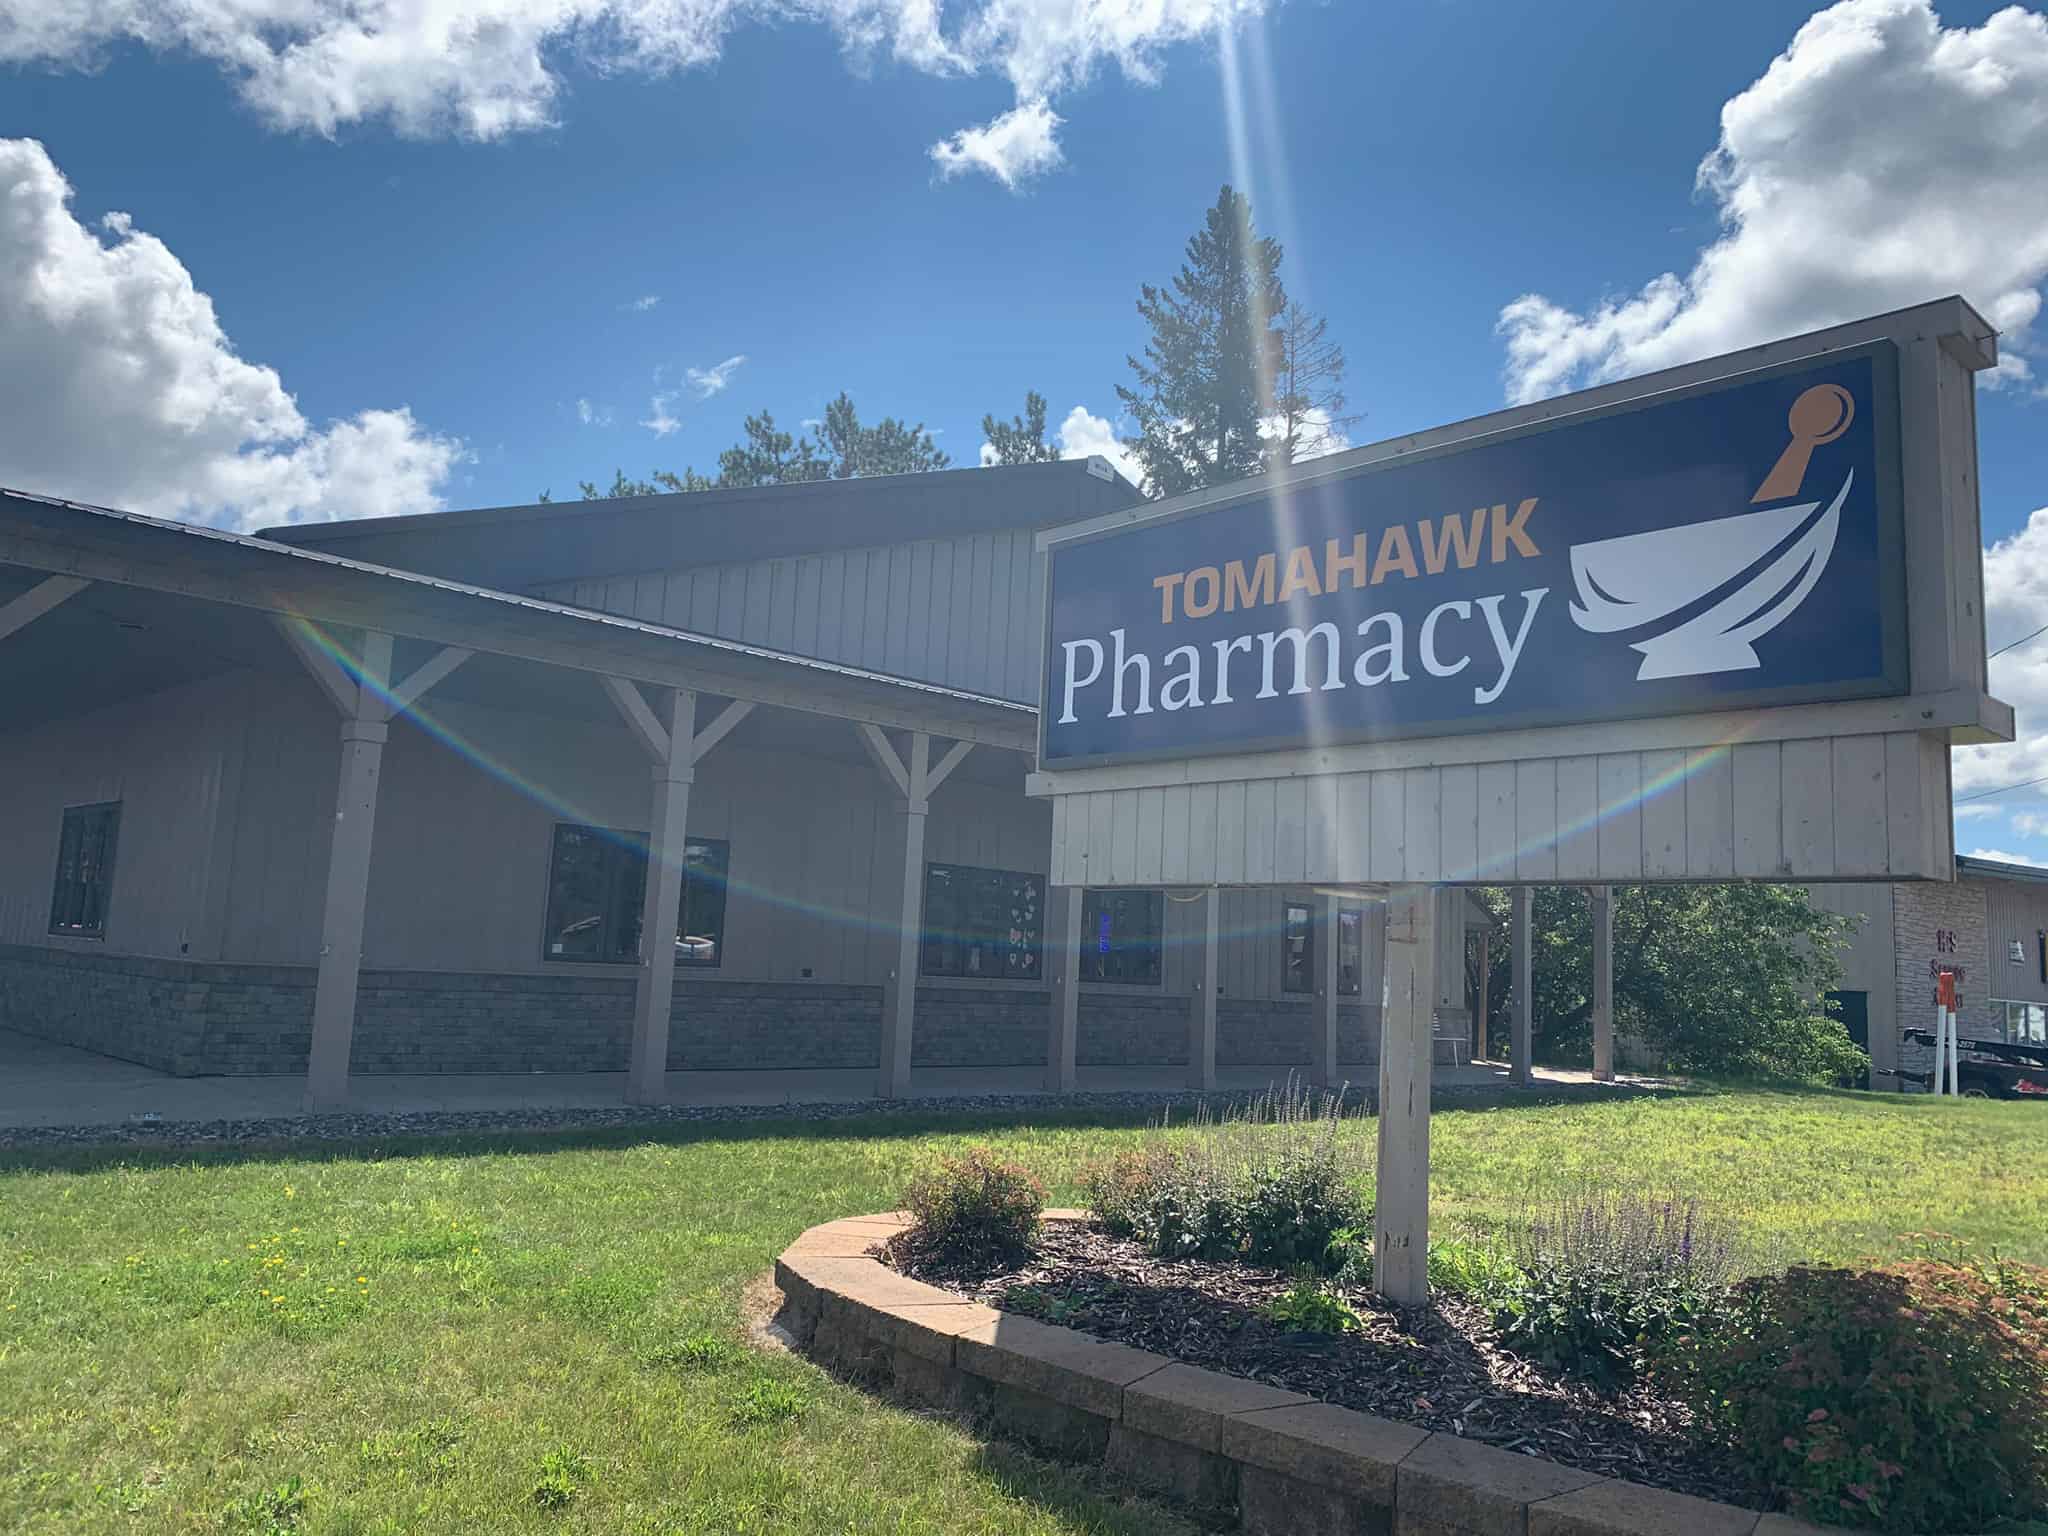 Tomahawk Pharmacy receives Best Marketing Promotion award